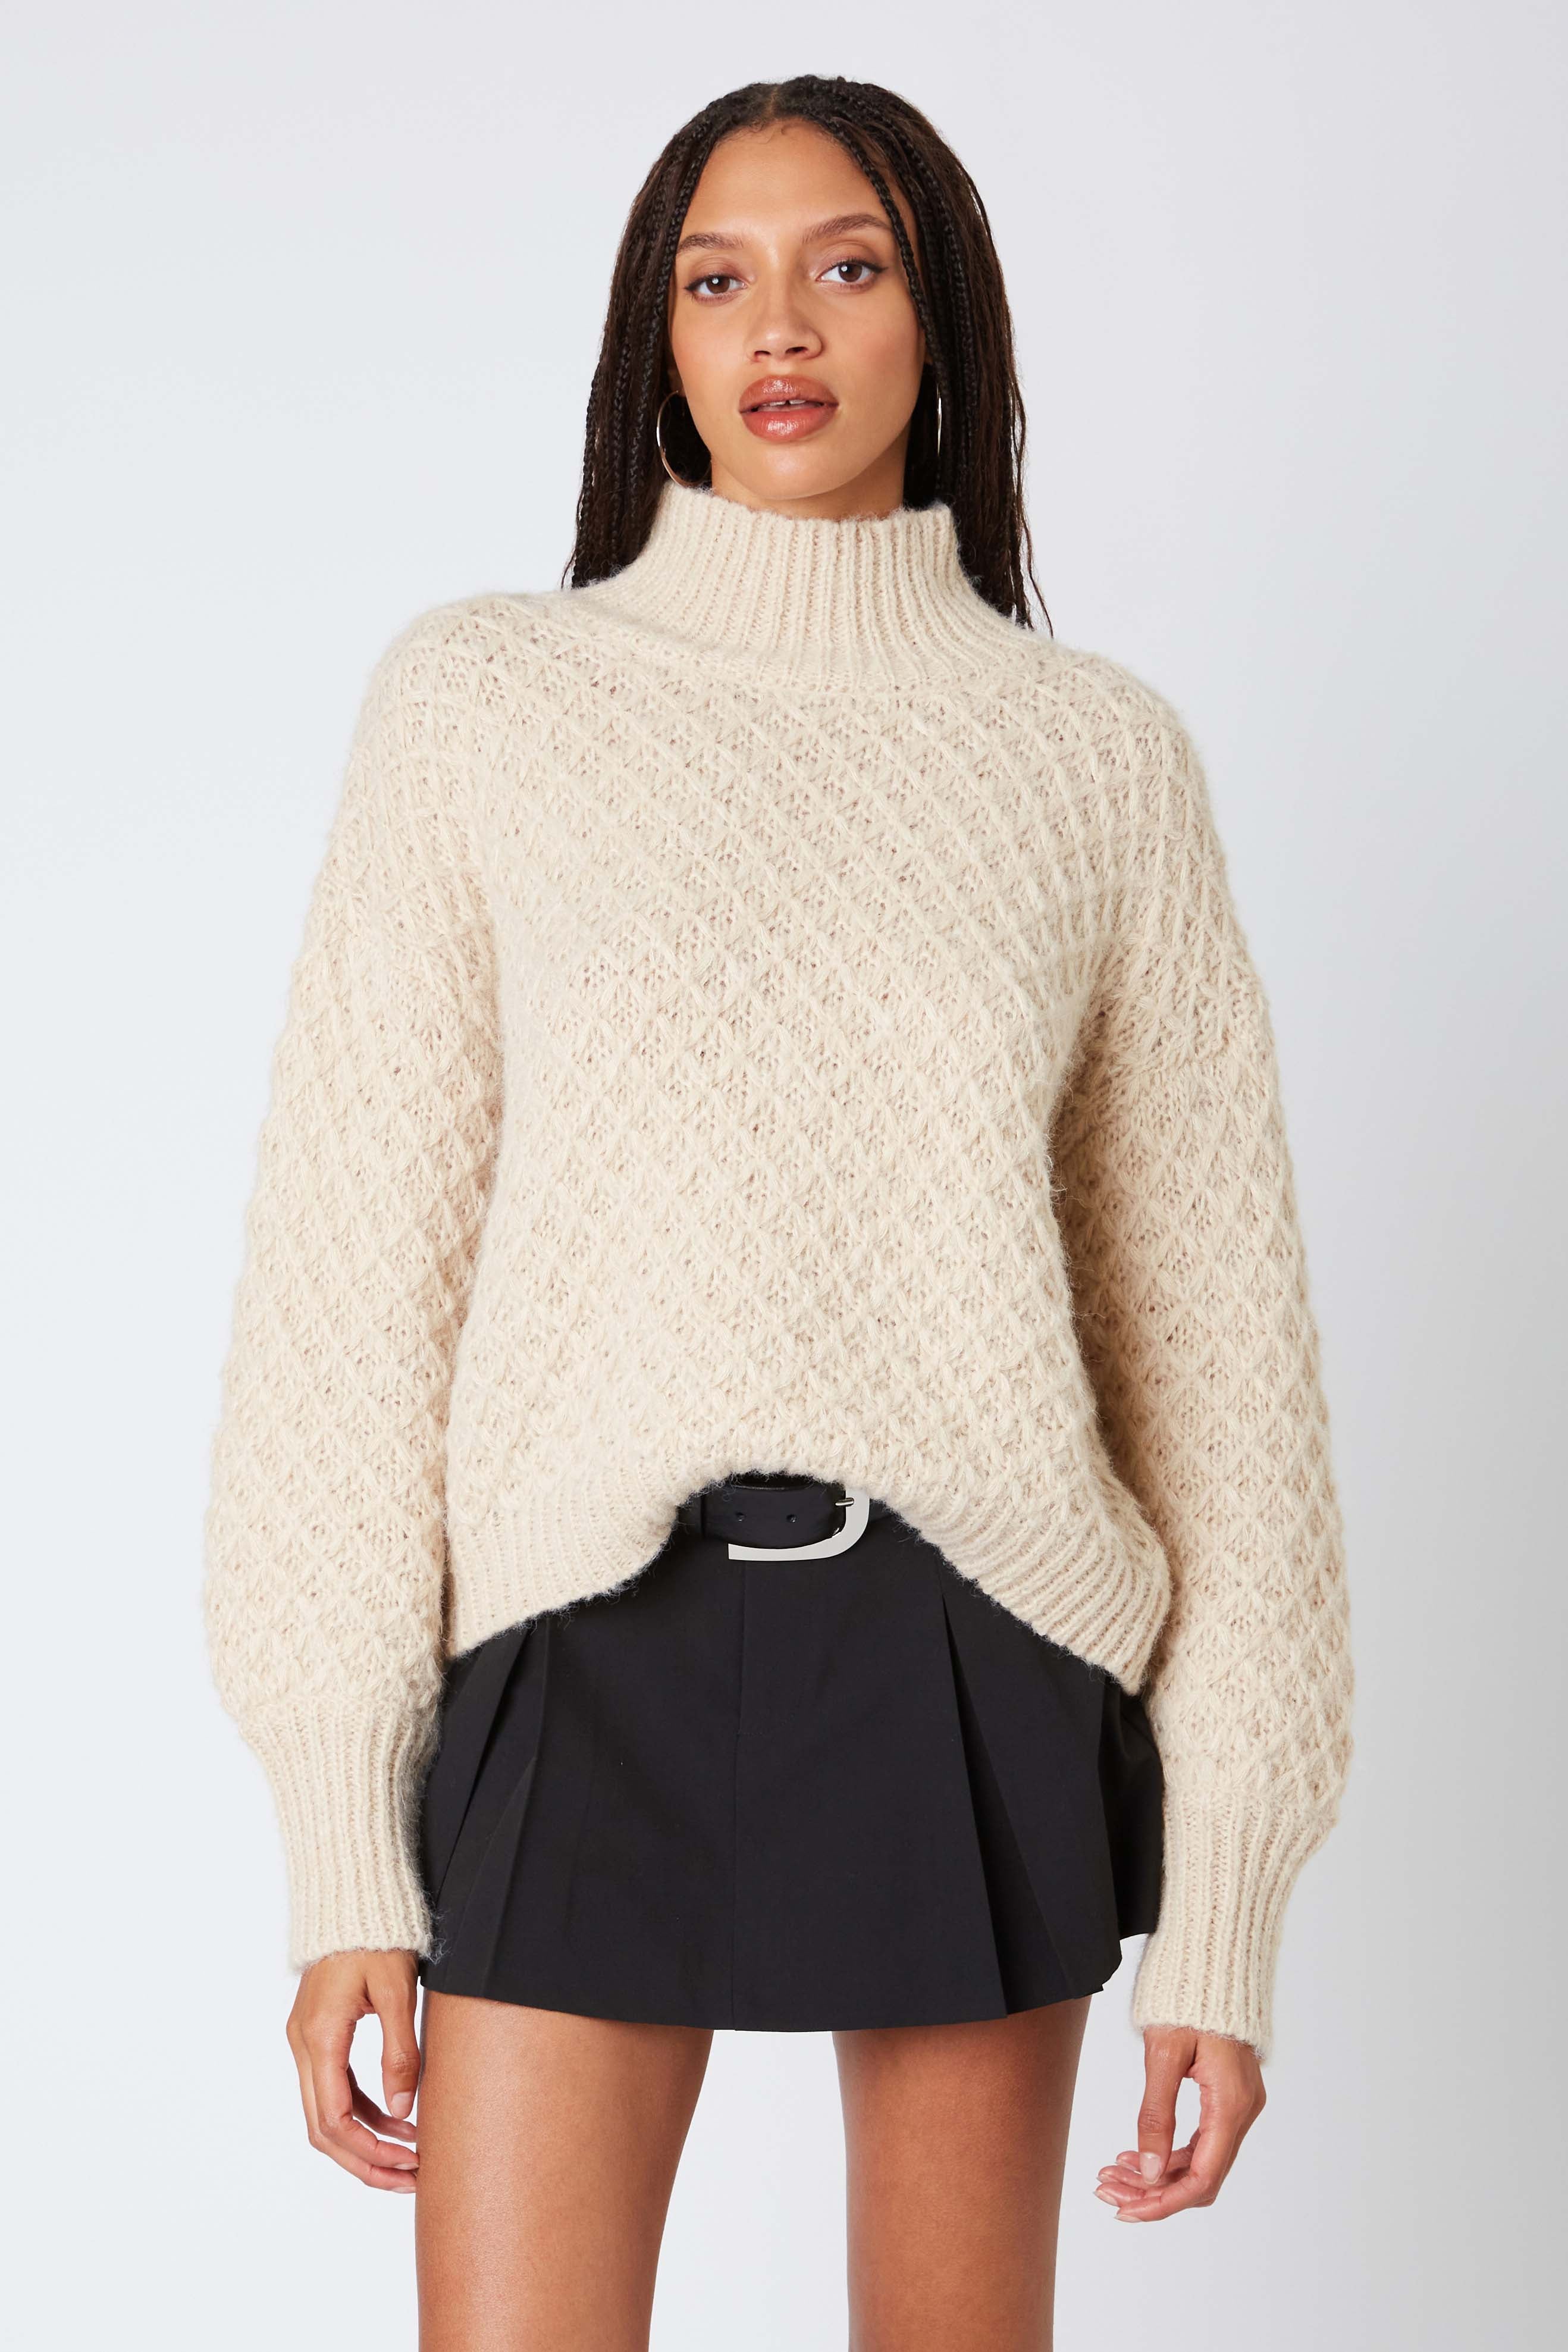 Knit Mockneck Sweater in Ecru Front View